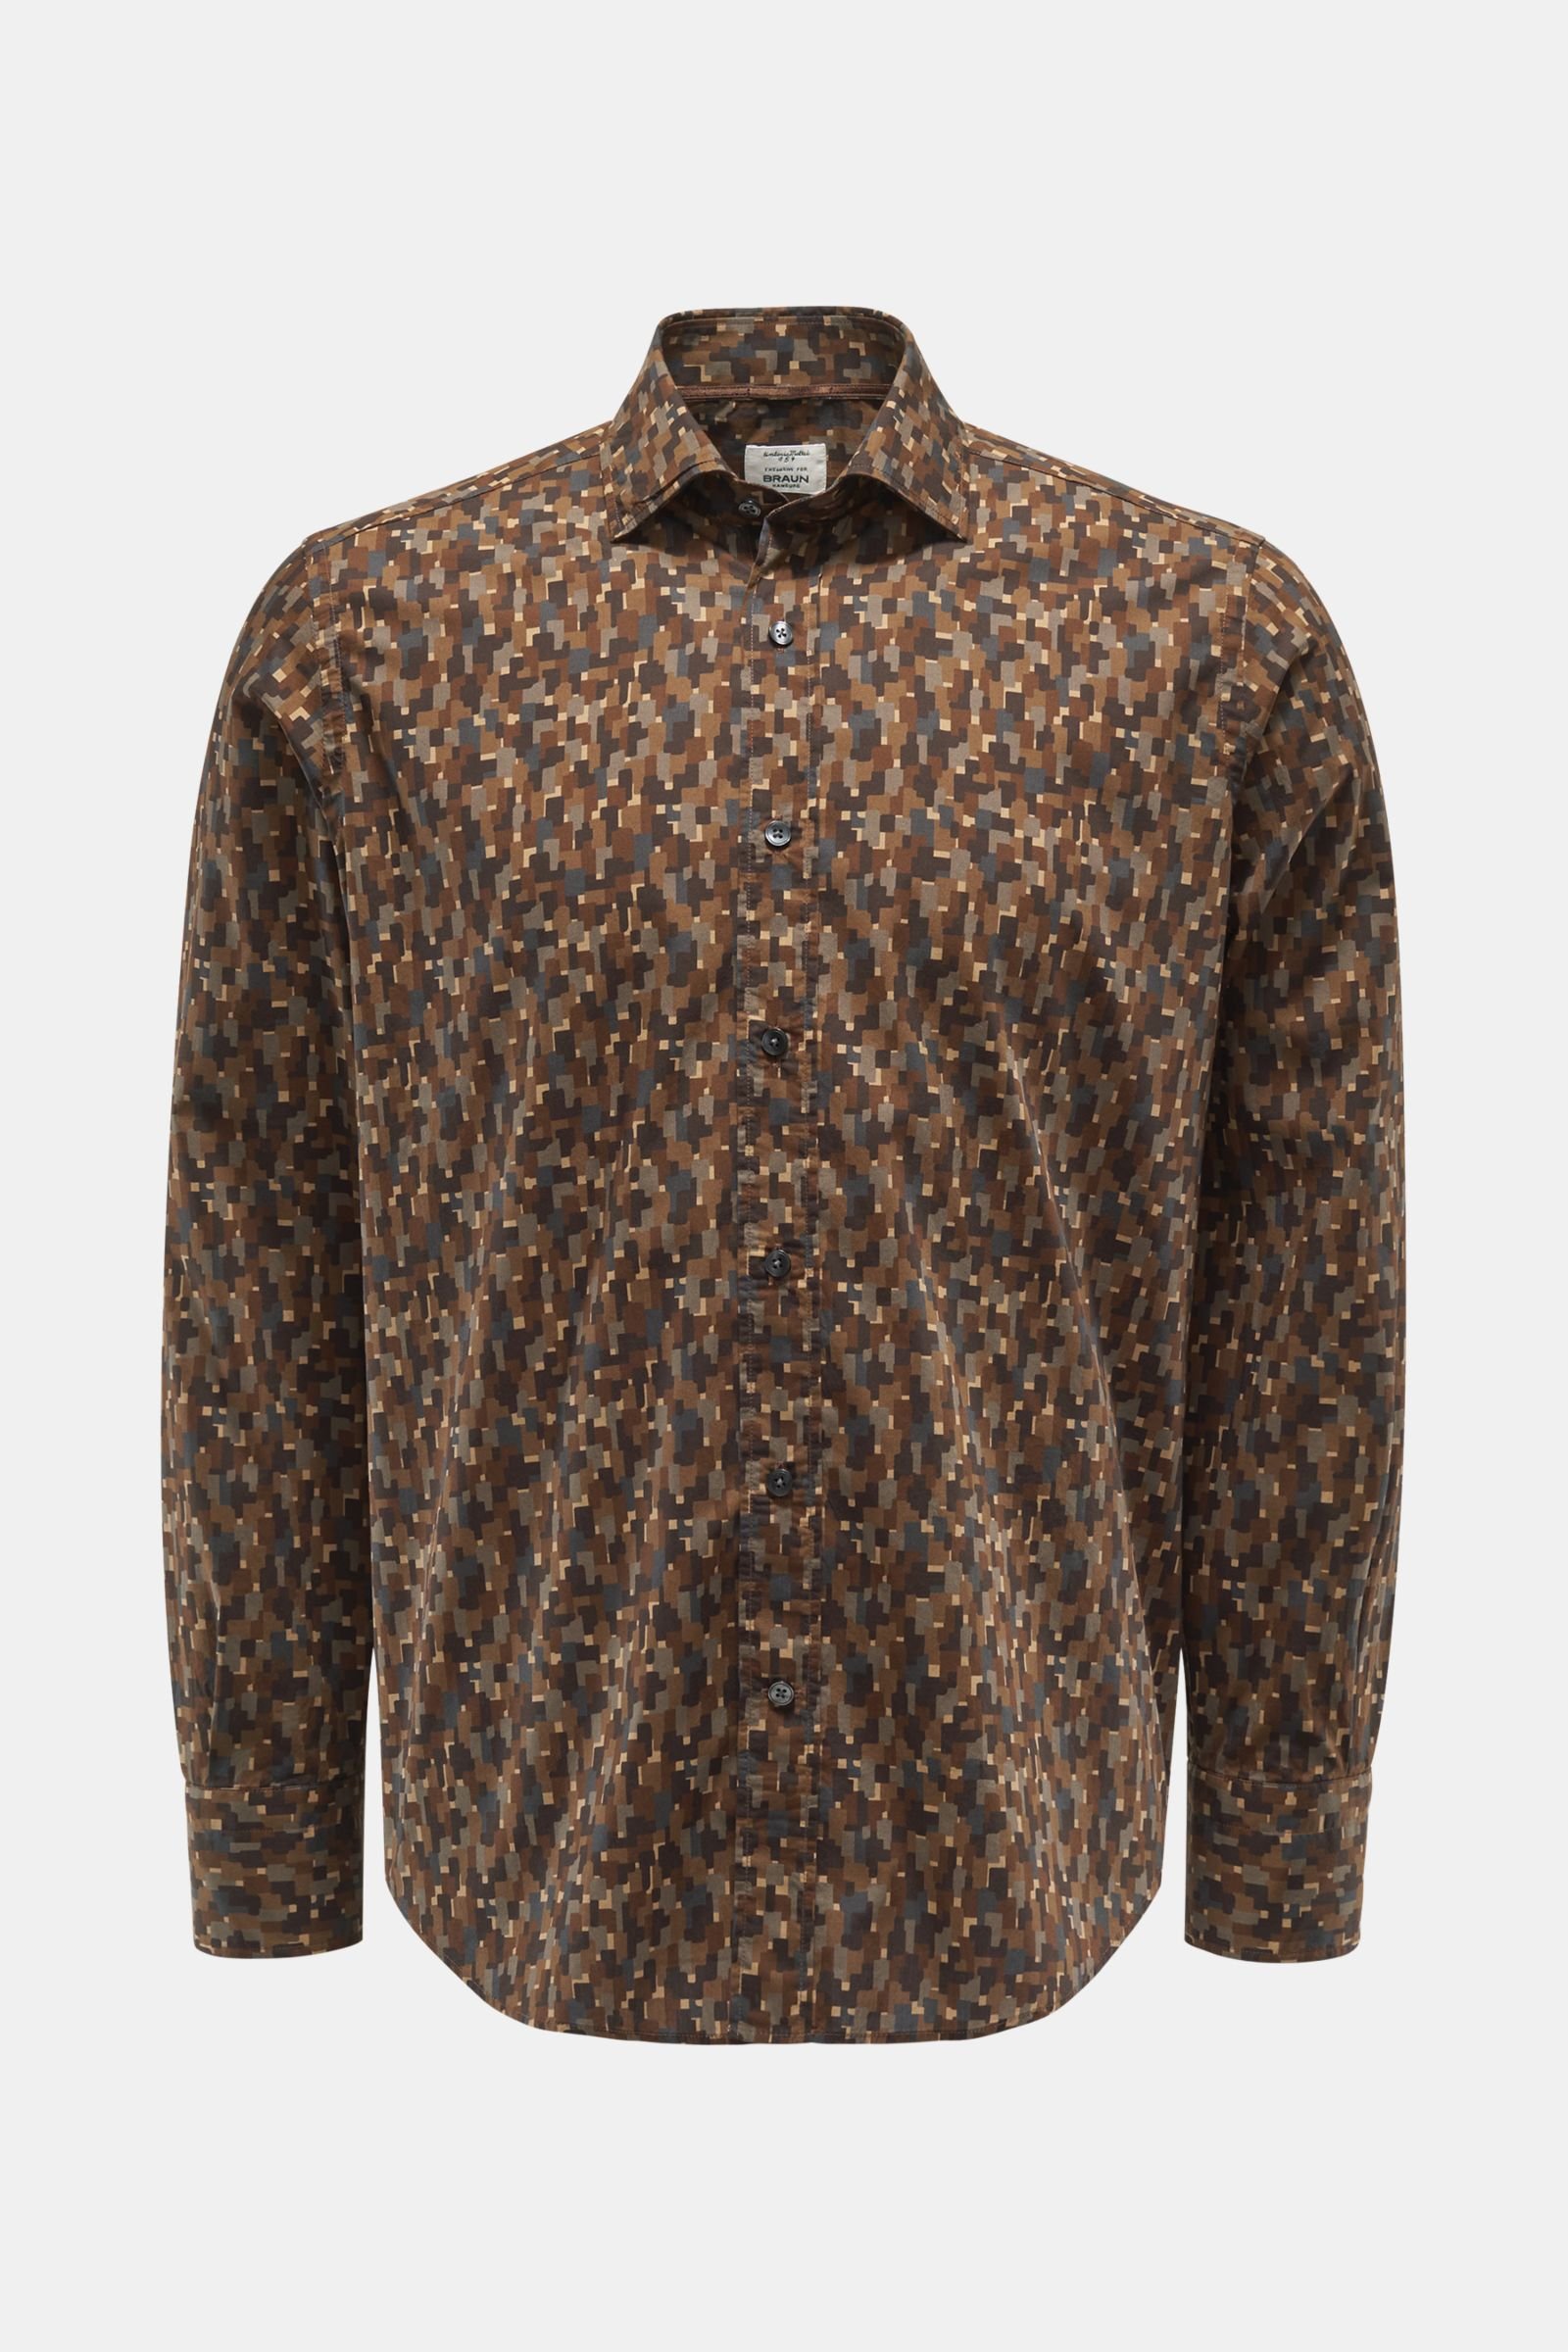 Casual shirt shark collar brown/khaki patterned